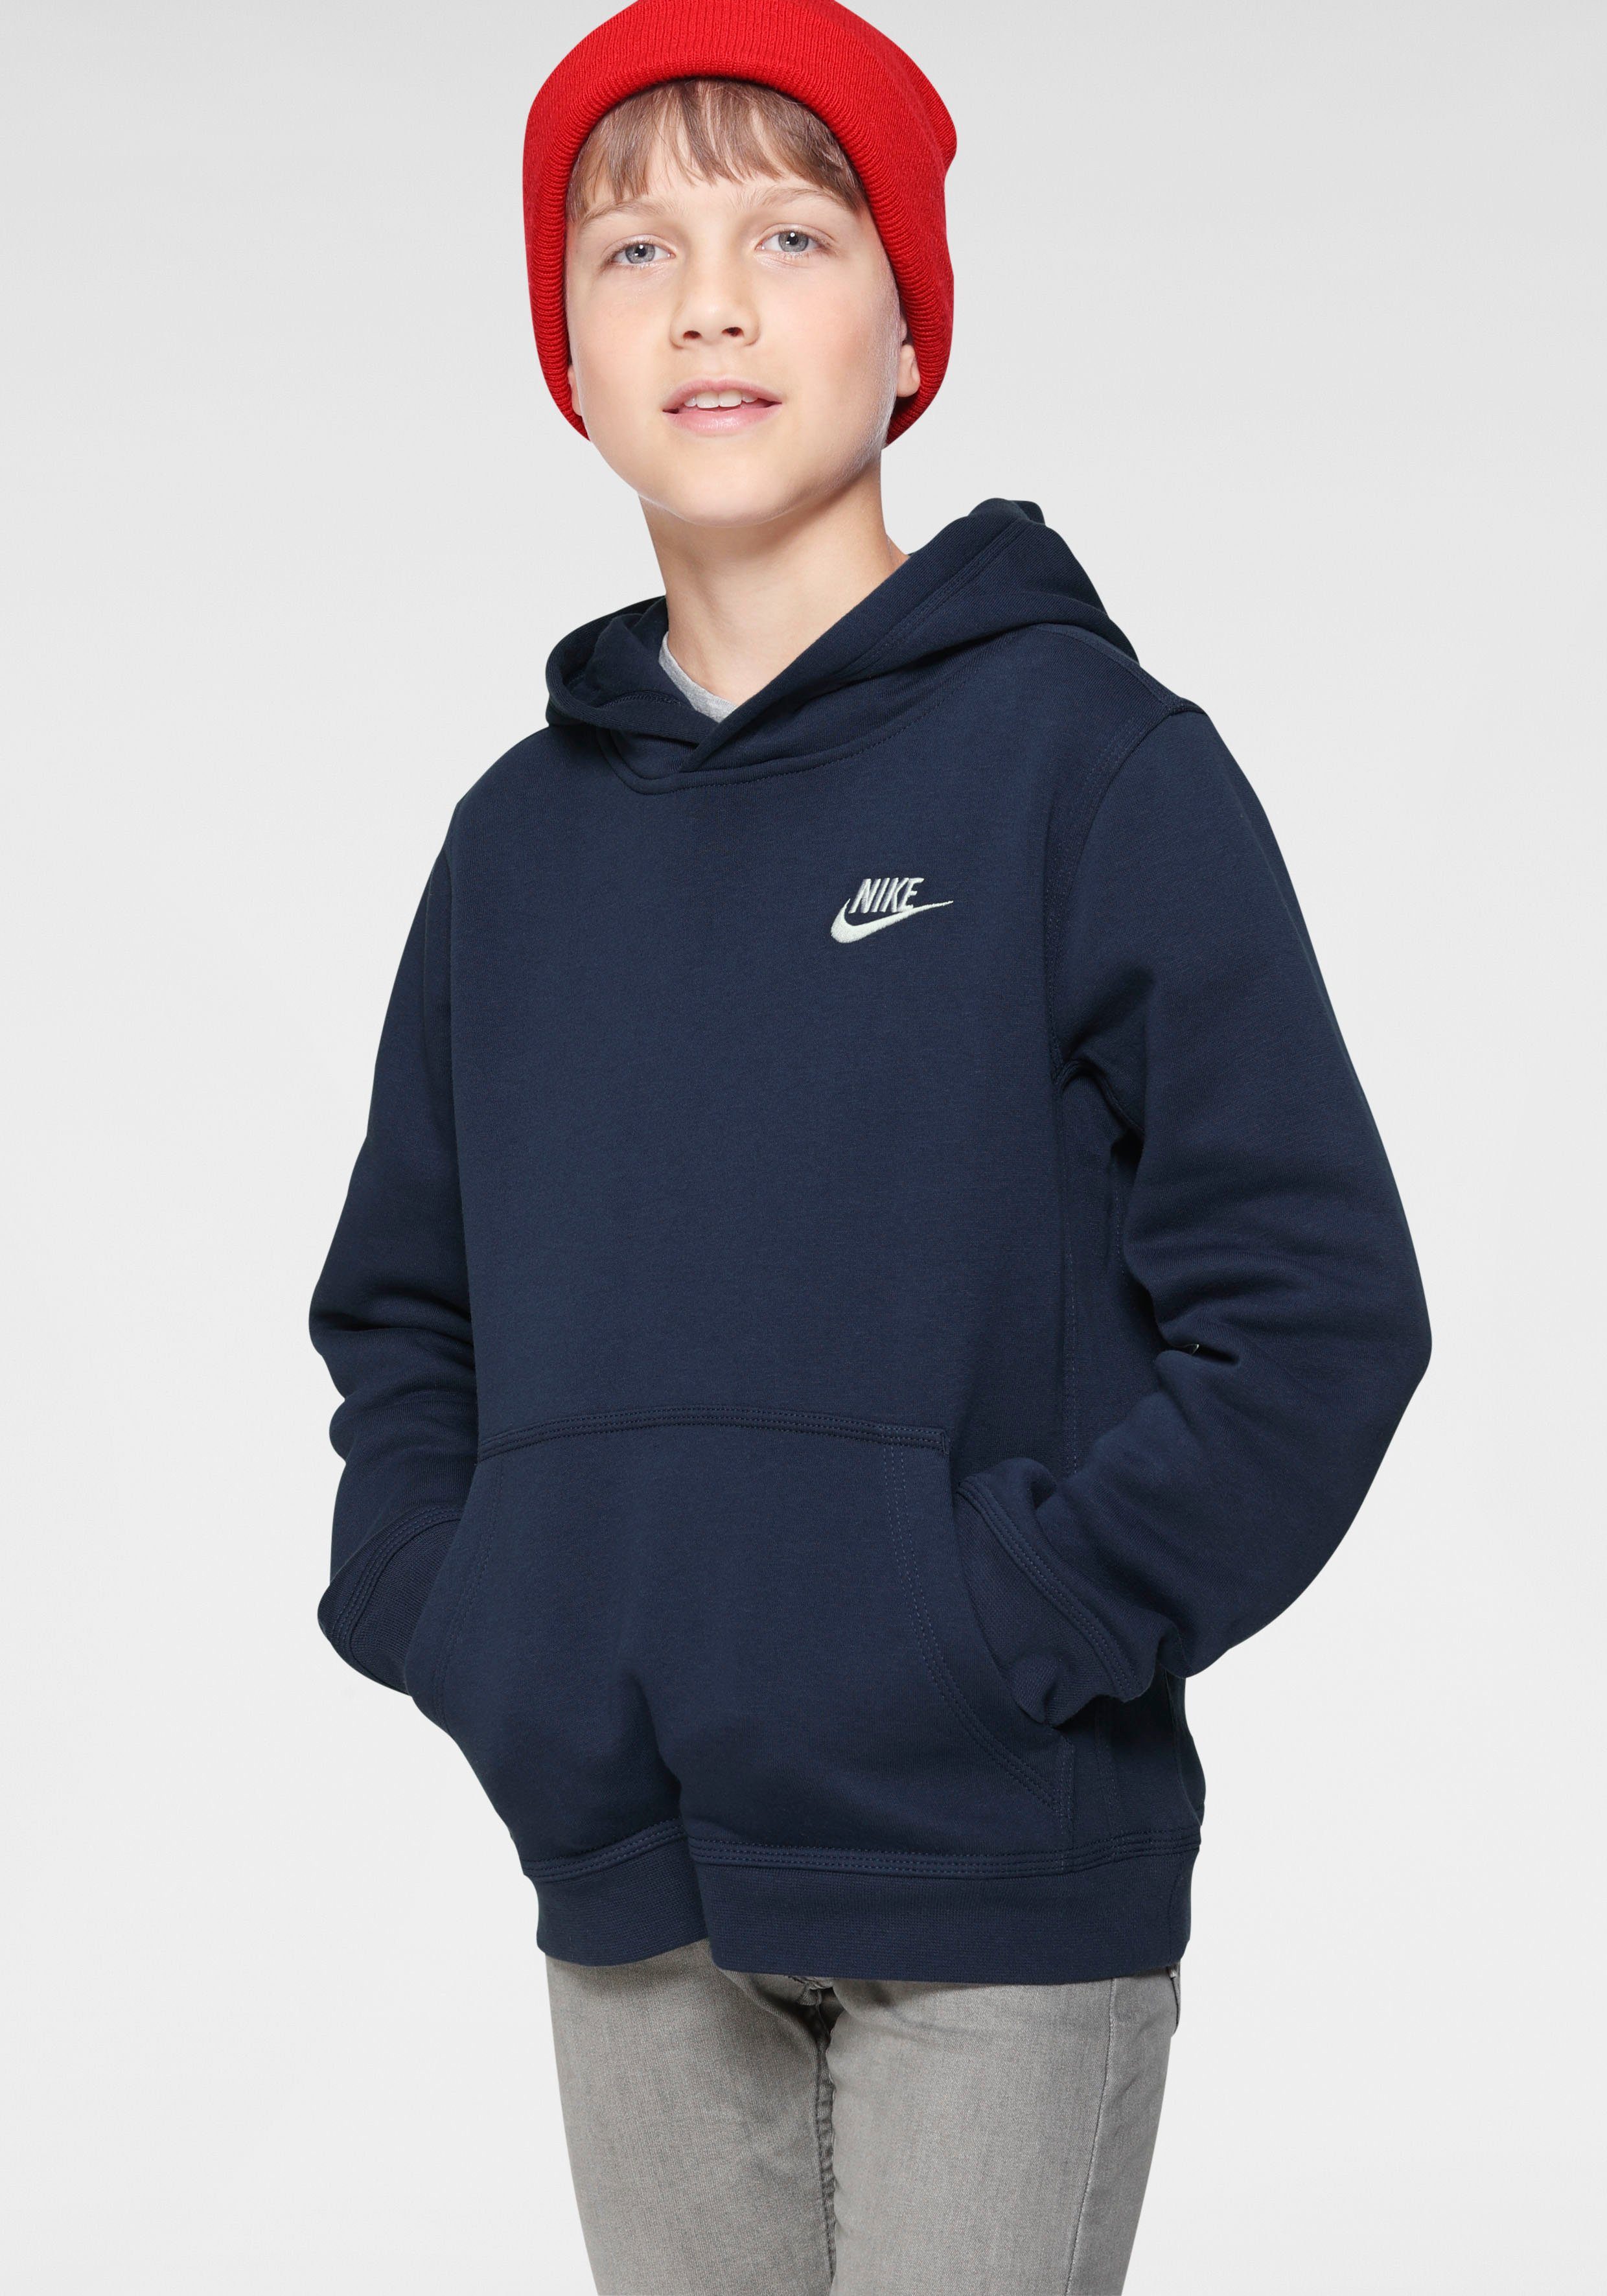 Big Club Hoodie Pullover Kapuzensweatshirt dunkelblau Sportswear Kids' Nike